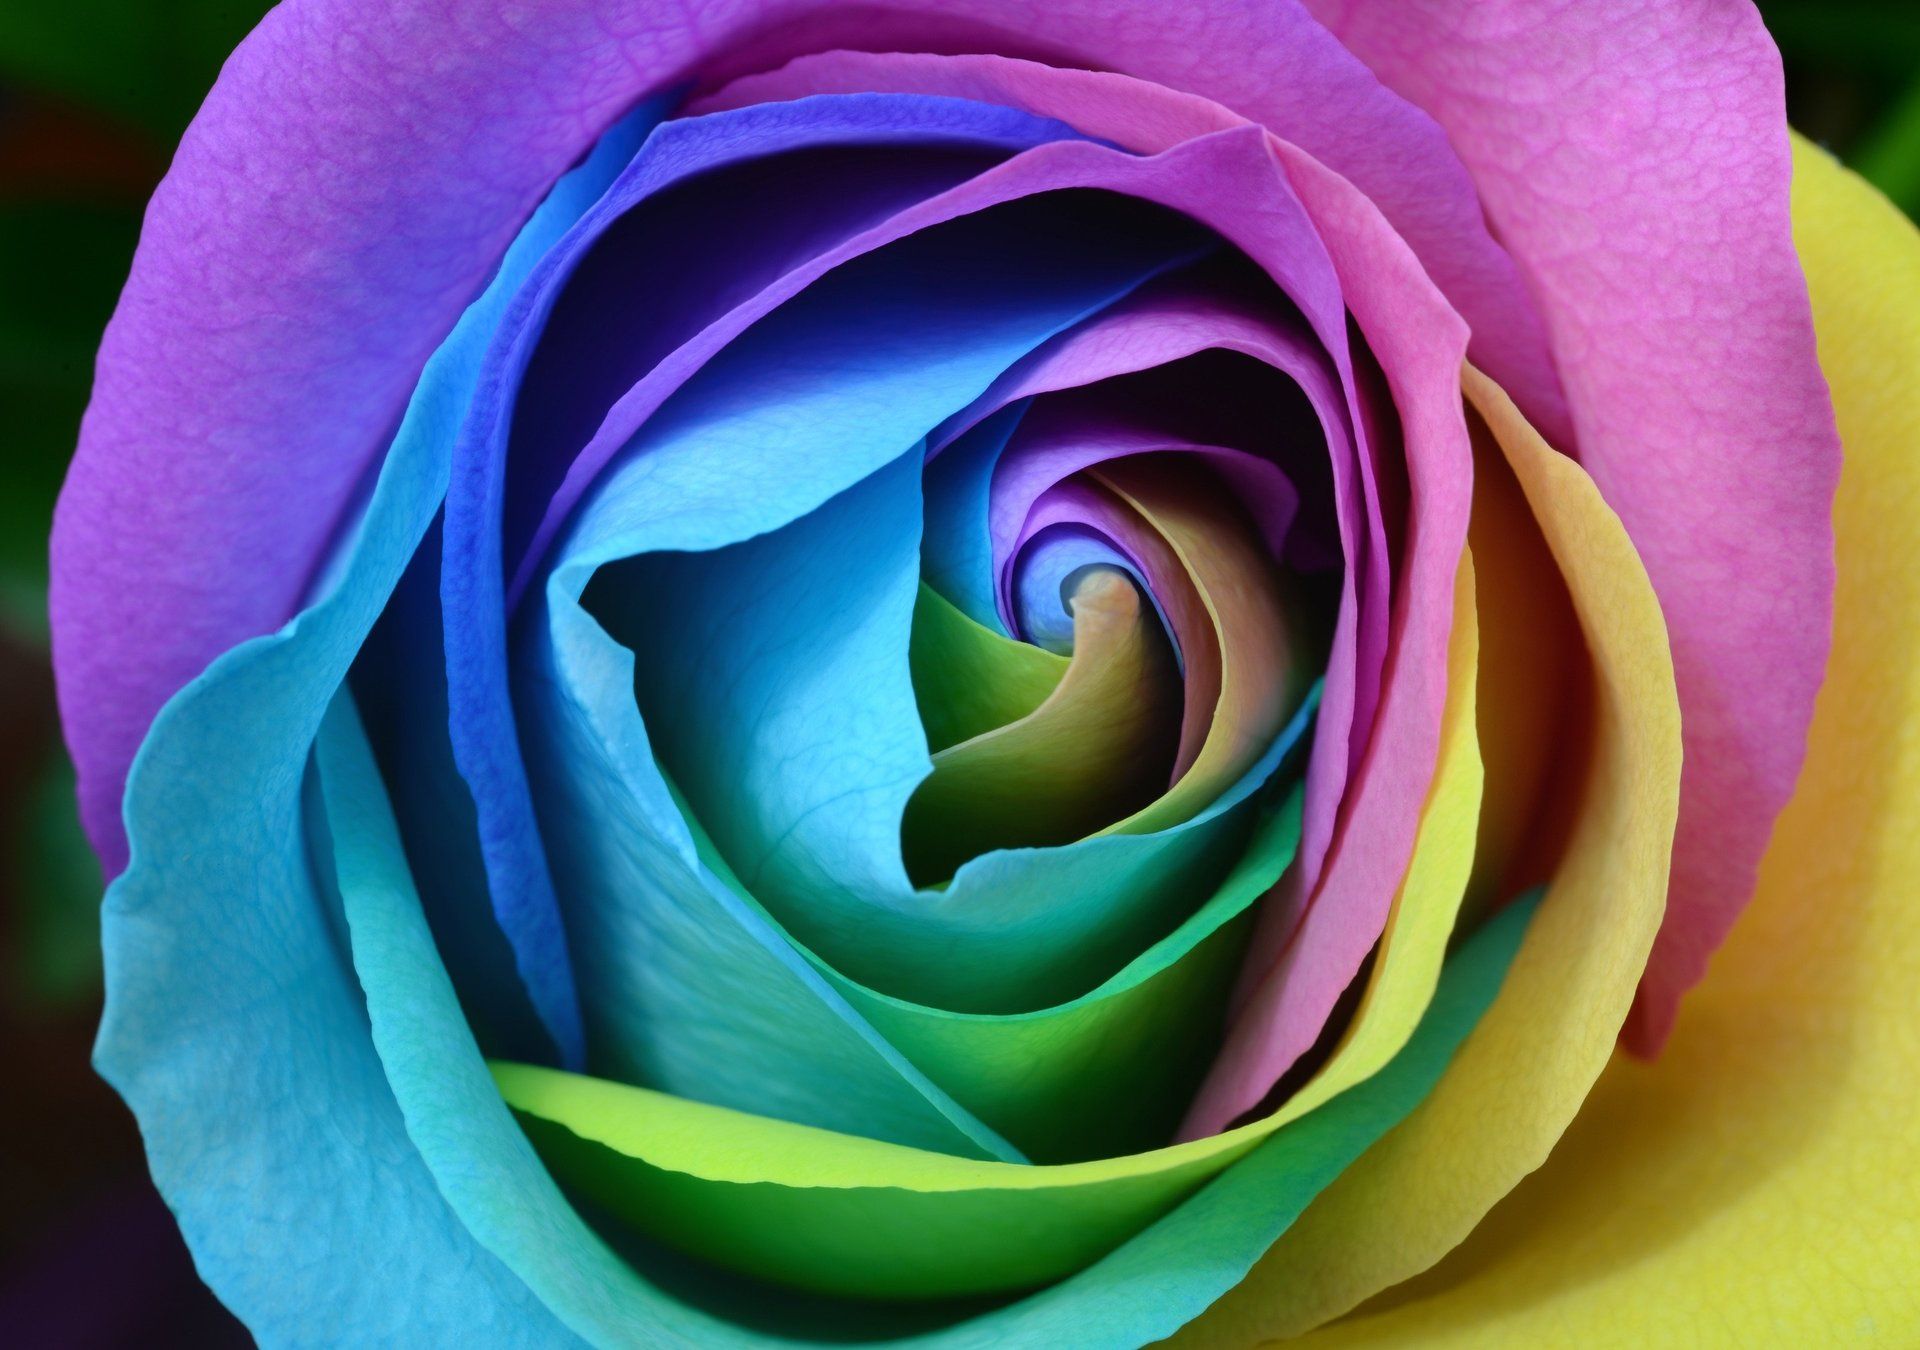 The rainbow rose image